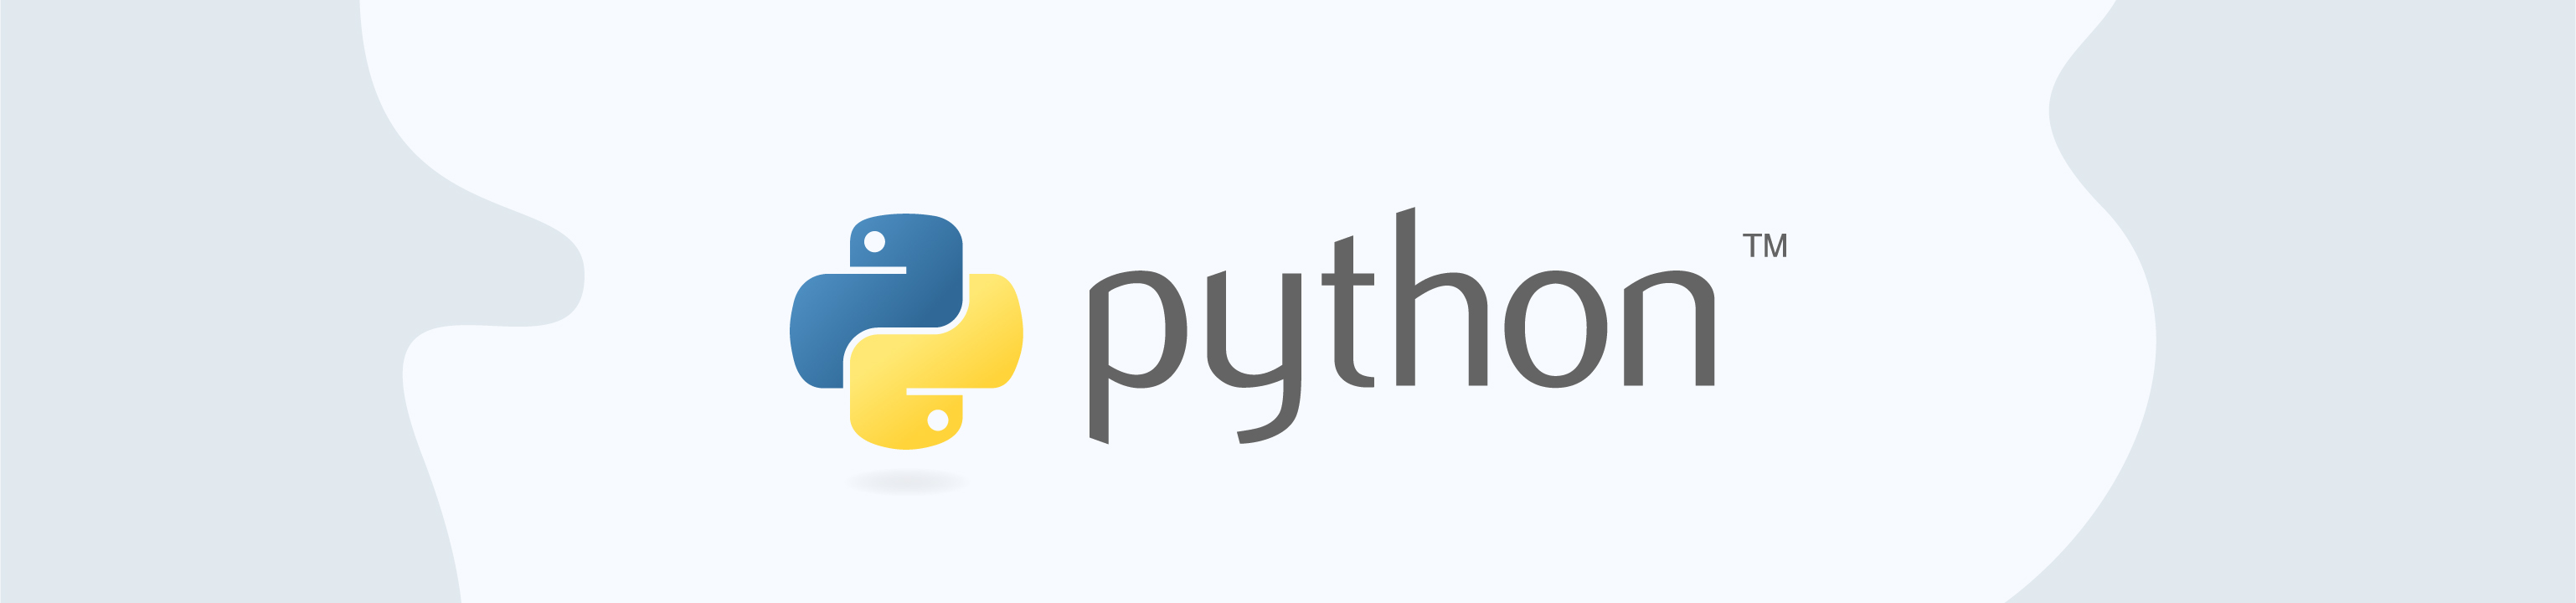 Image — Python — language of the future